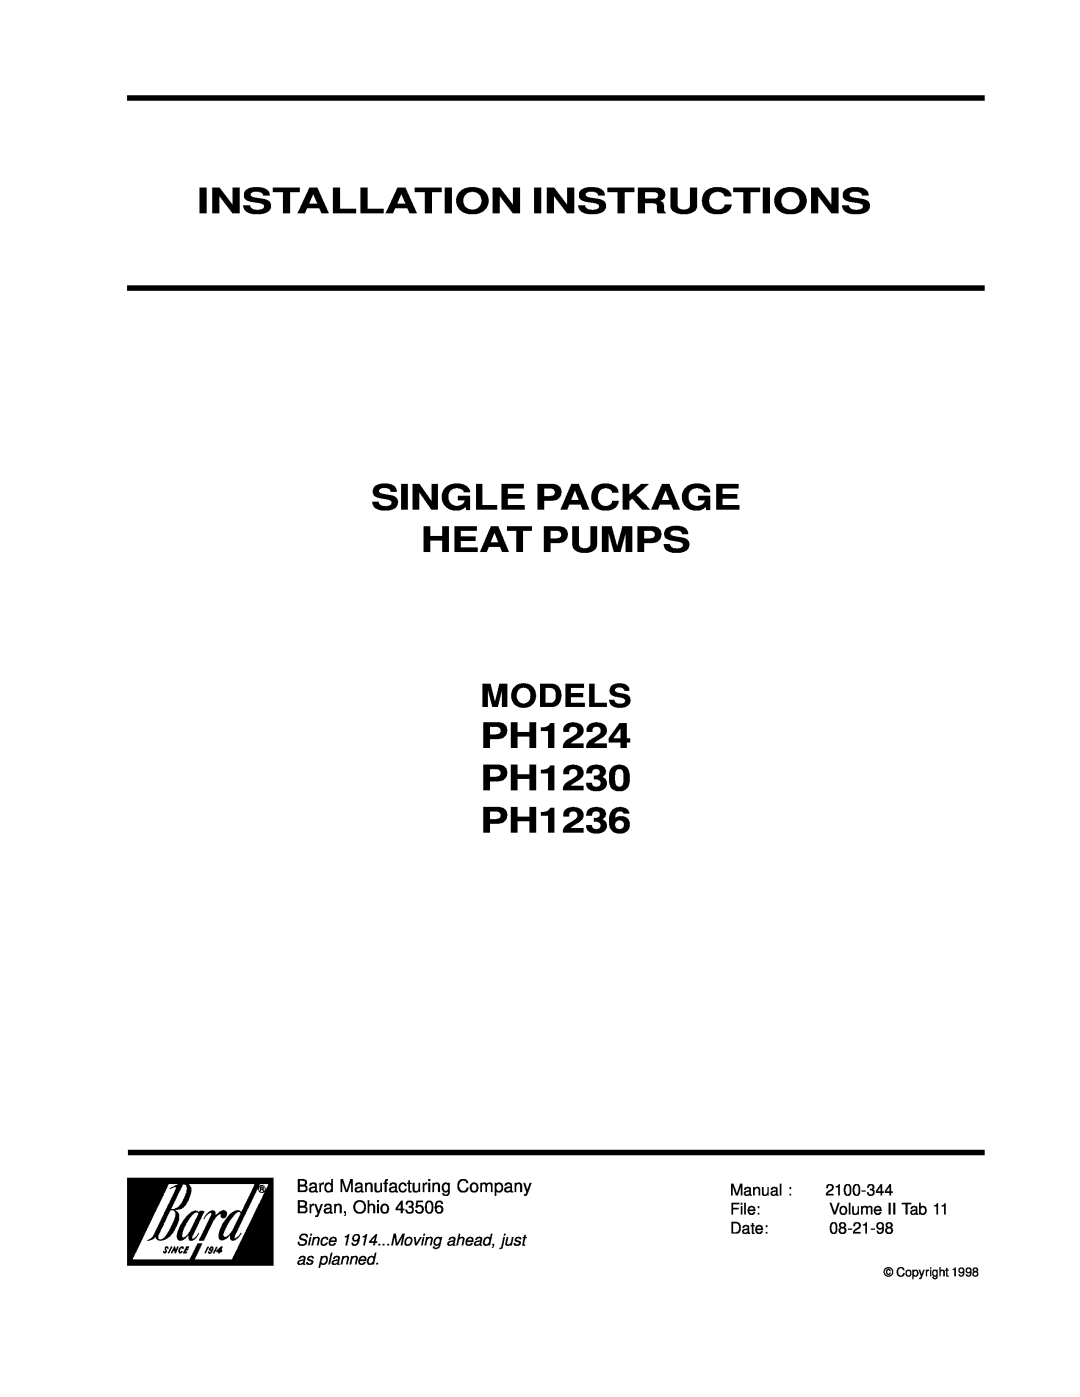 Bard installation instructions Models, Installation Instructions Single Package, Heat Pumps, PH1224 PH1230 PH1236 